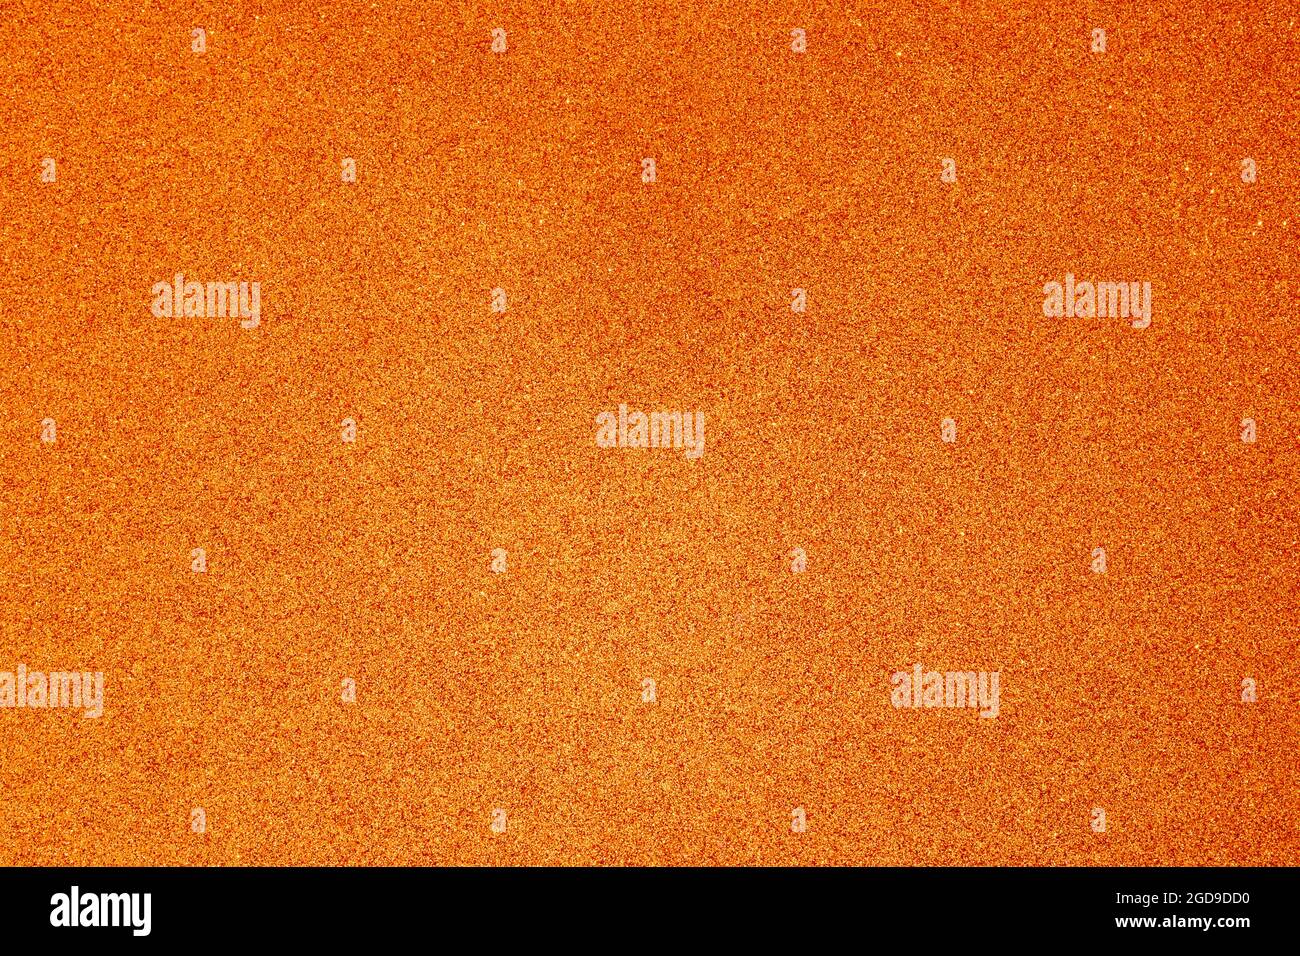 Orange Glitter Texture Abstract Background Stock Photo - Download Image Now  - Orange Color, Glitter, Glittering - iStock